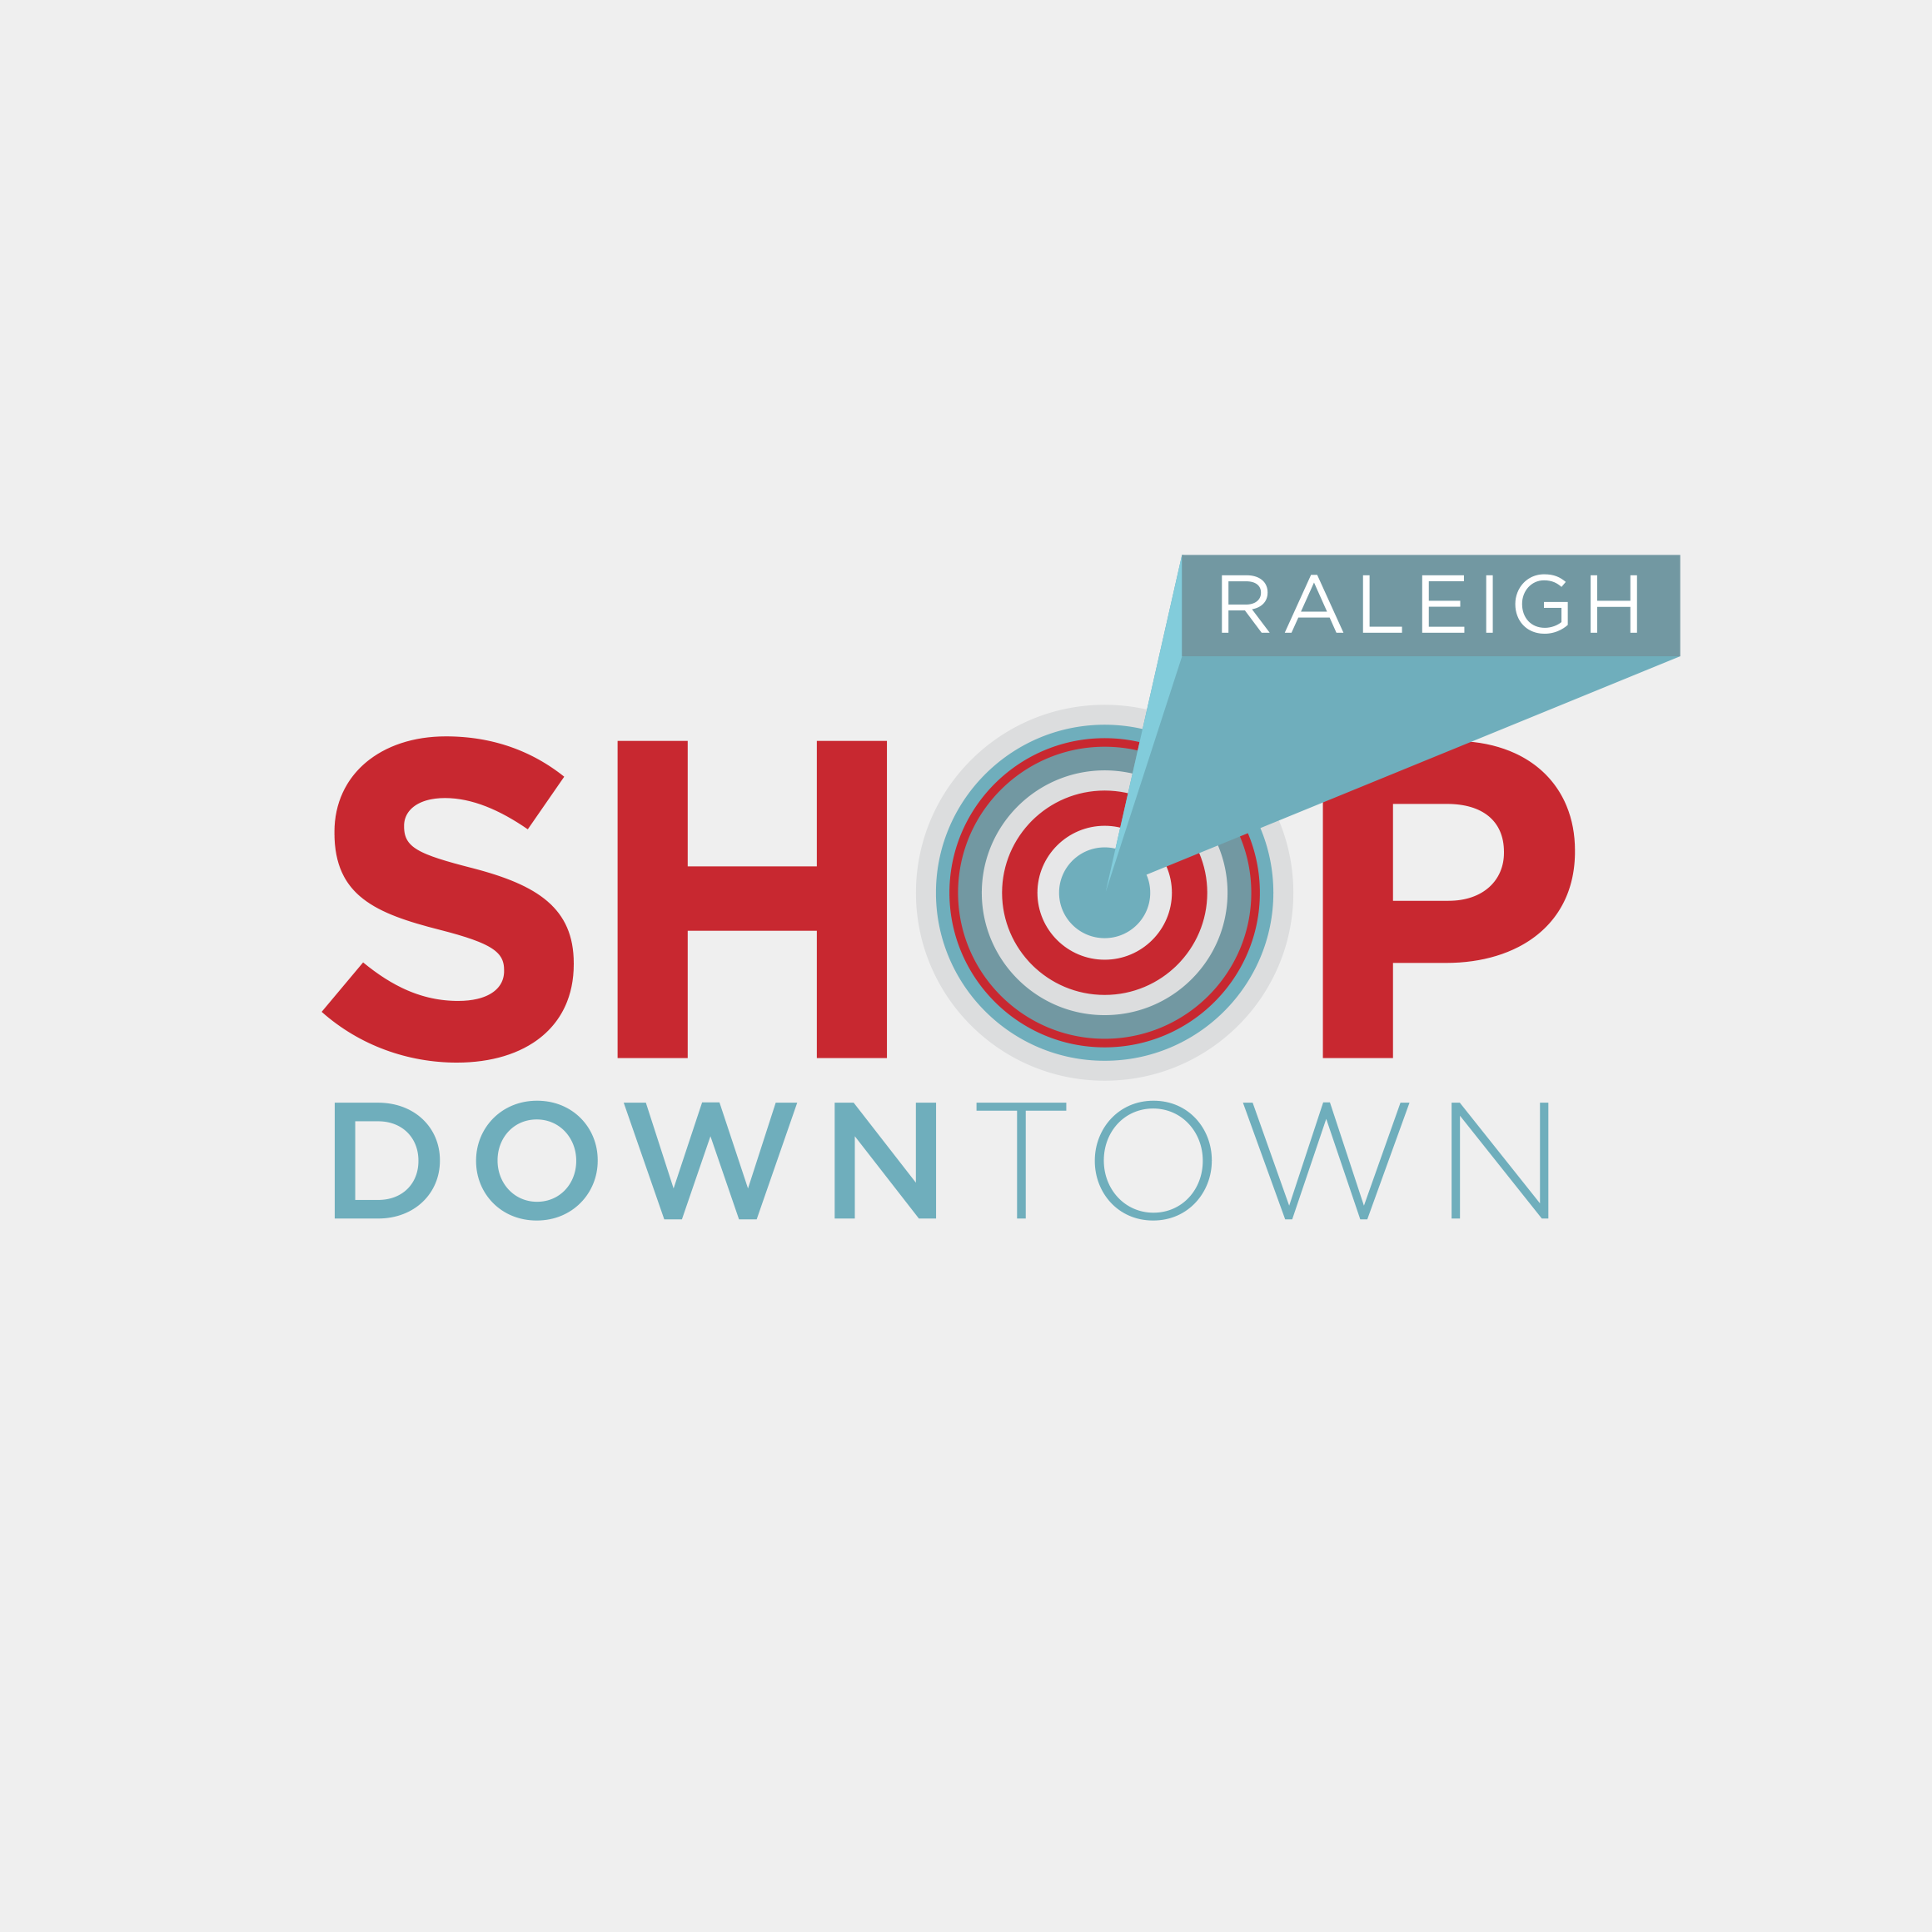 shop downtown raleigh logo